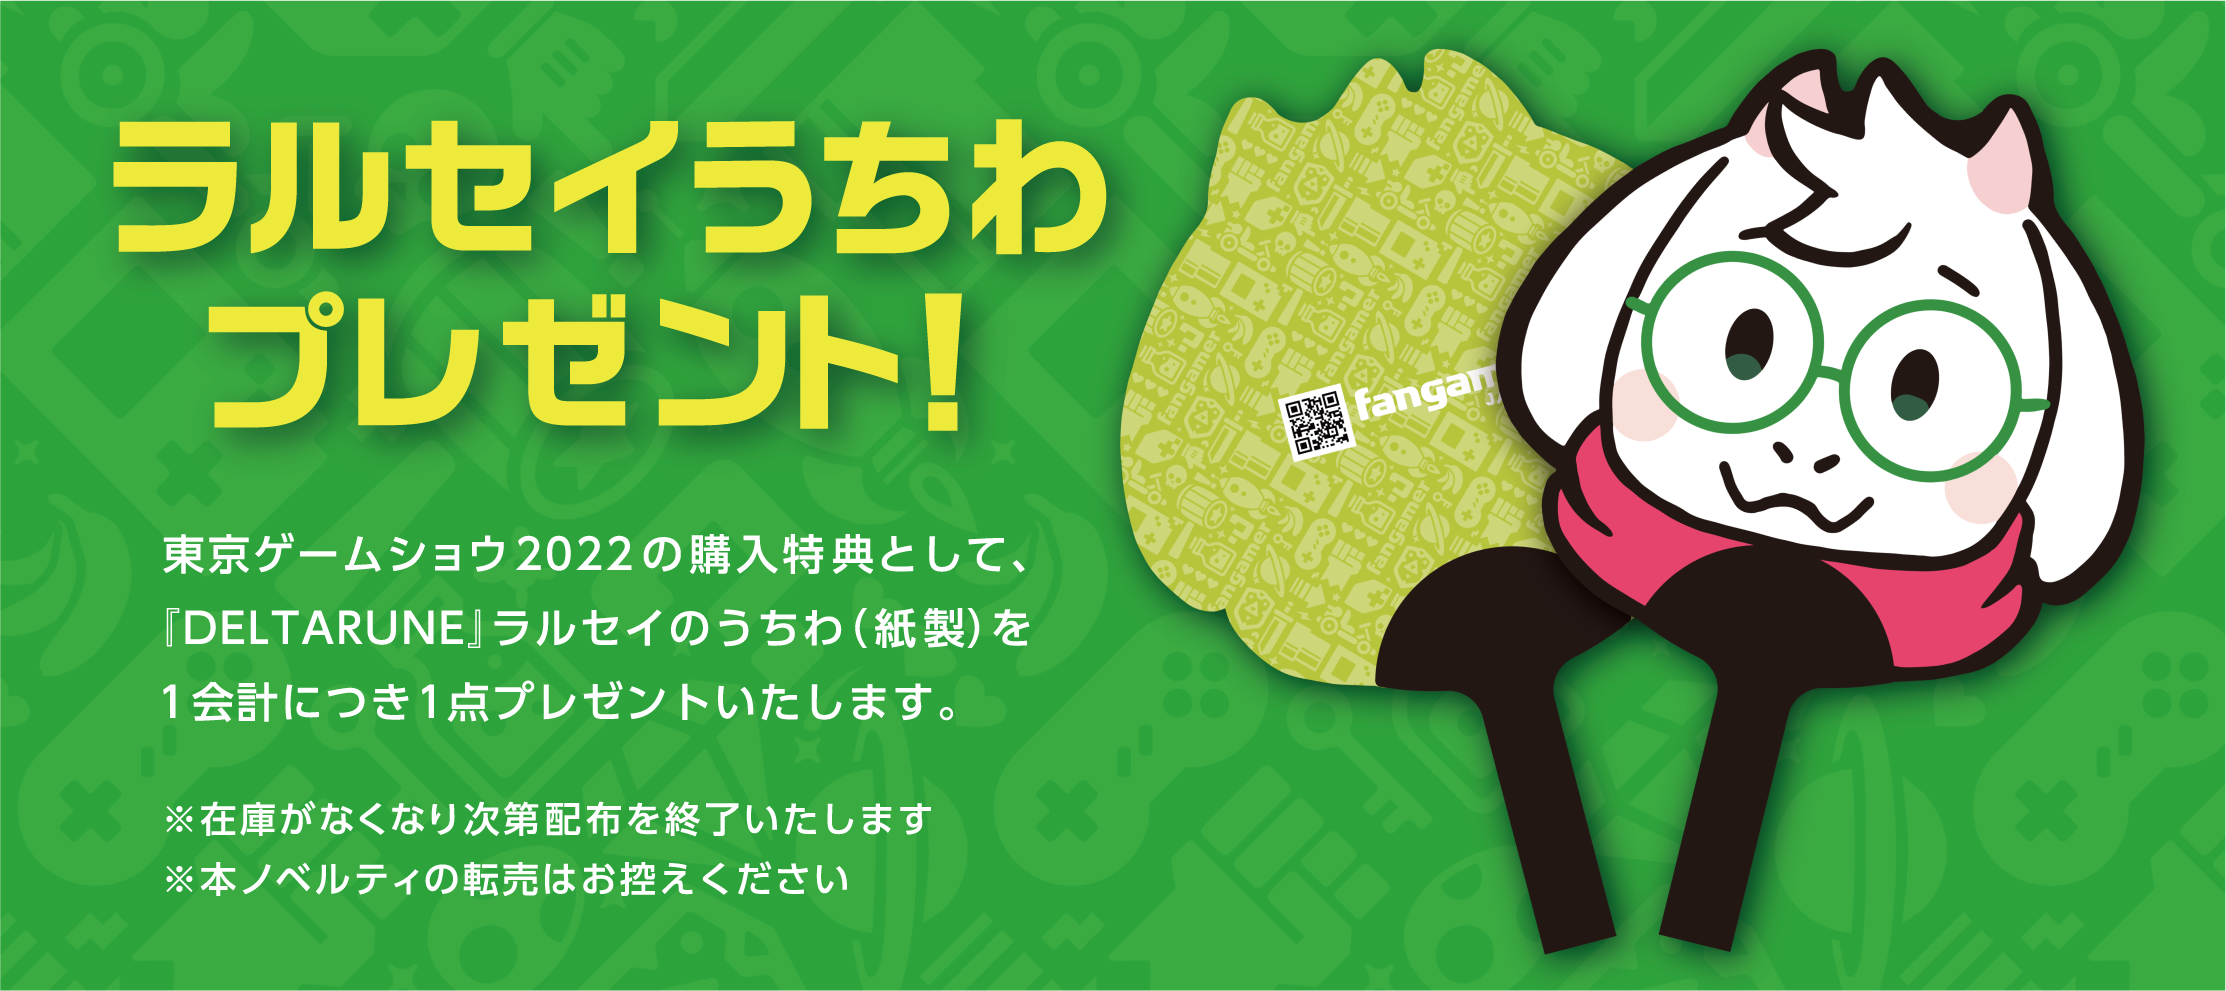 Fangamer Japan @TOKYO GAME SHOW2022 - Fangamer Japan